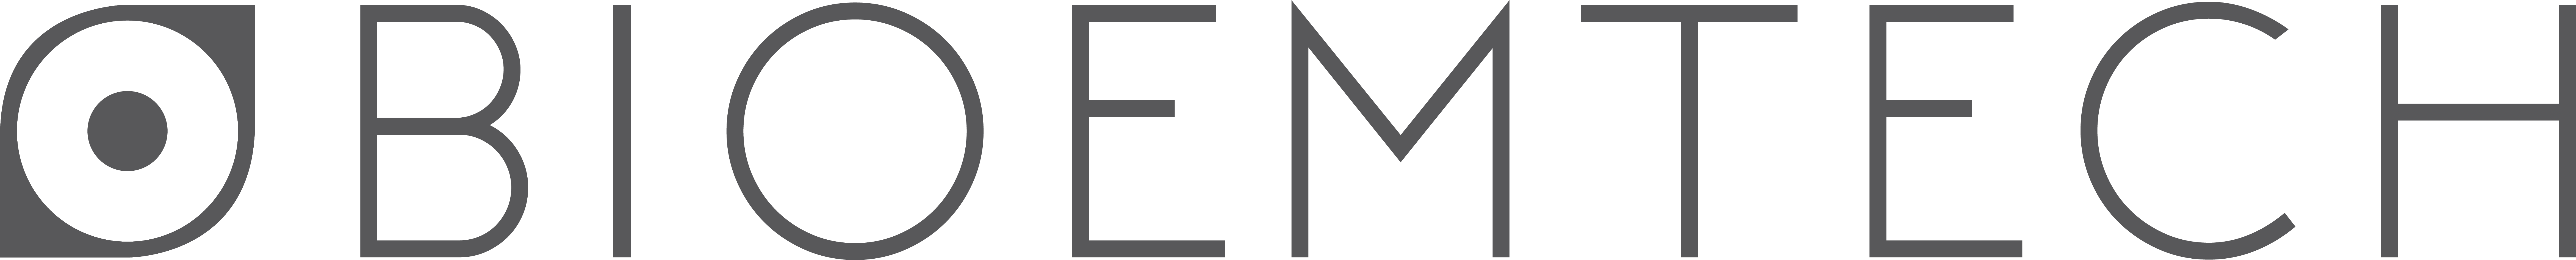 Logo: BIOEMTECH